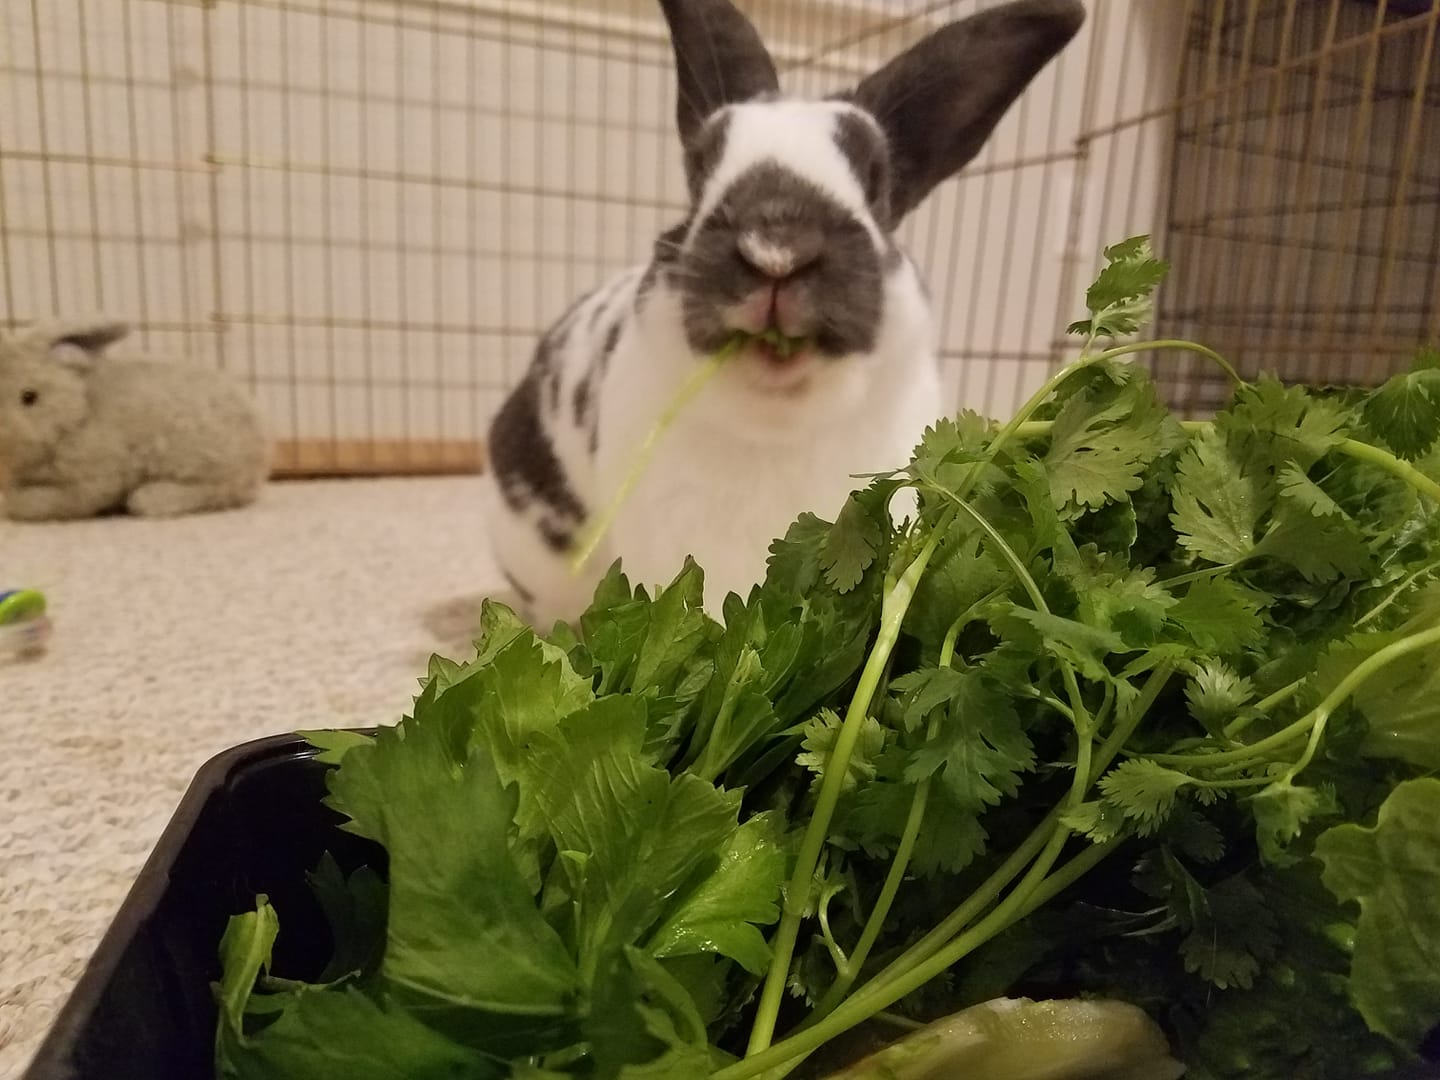 Fresh foods for rabbits. Photo of rabbit eating fresh greens